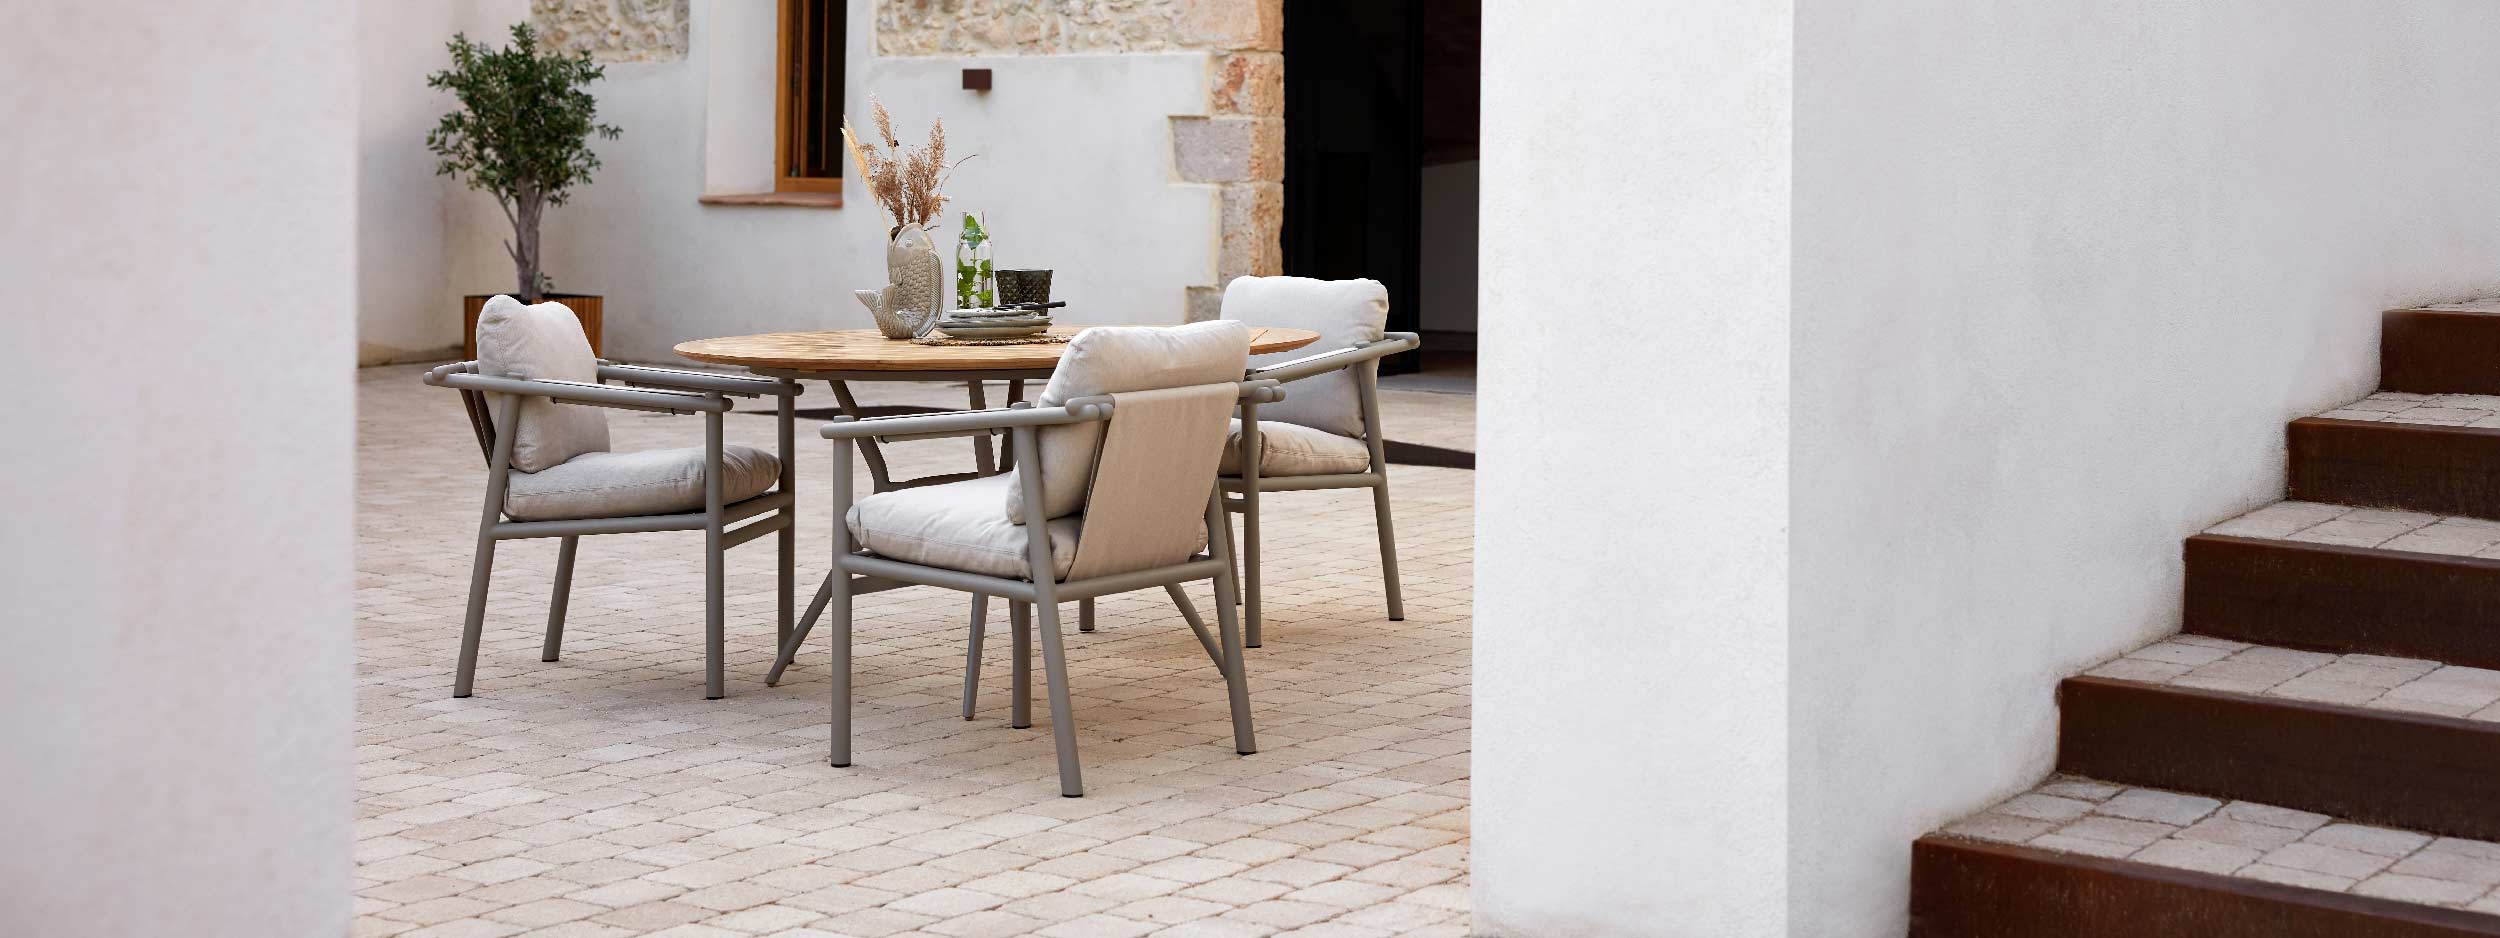 Image of Sticks aluminium armchairs around Joy circular garden dining table by Cane-line